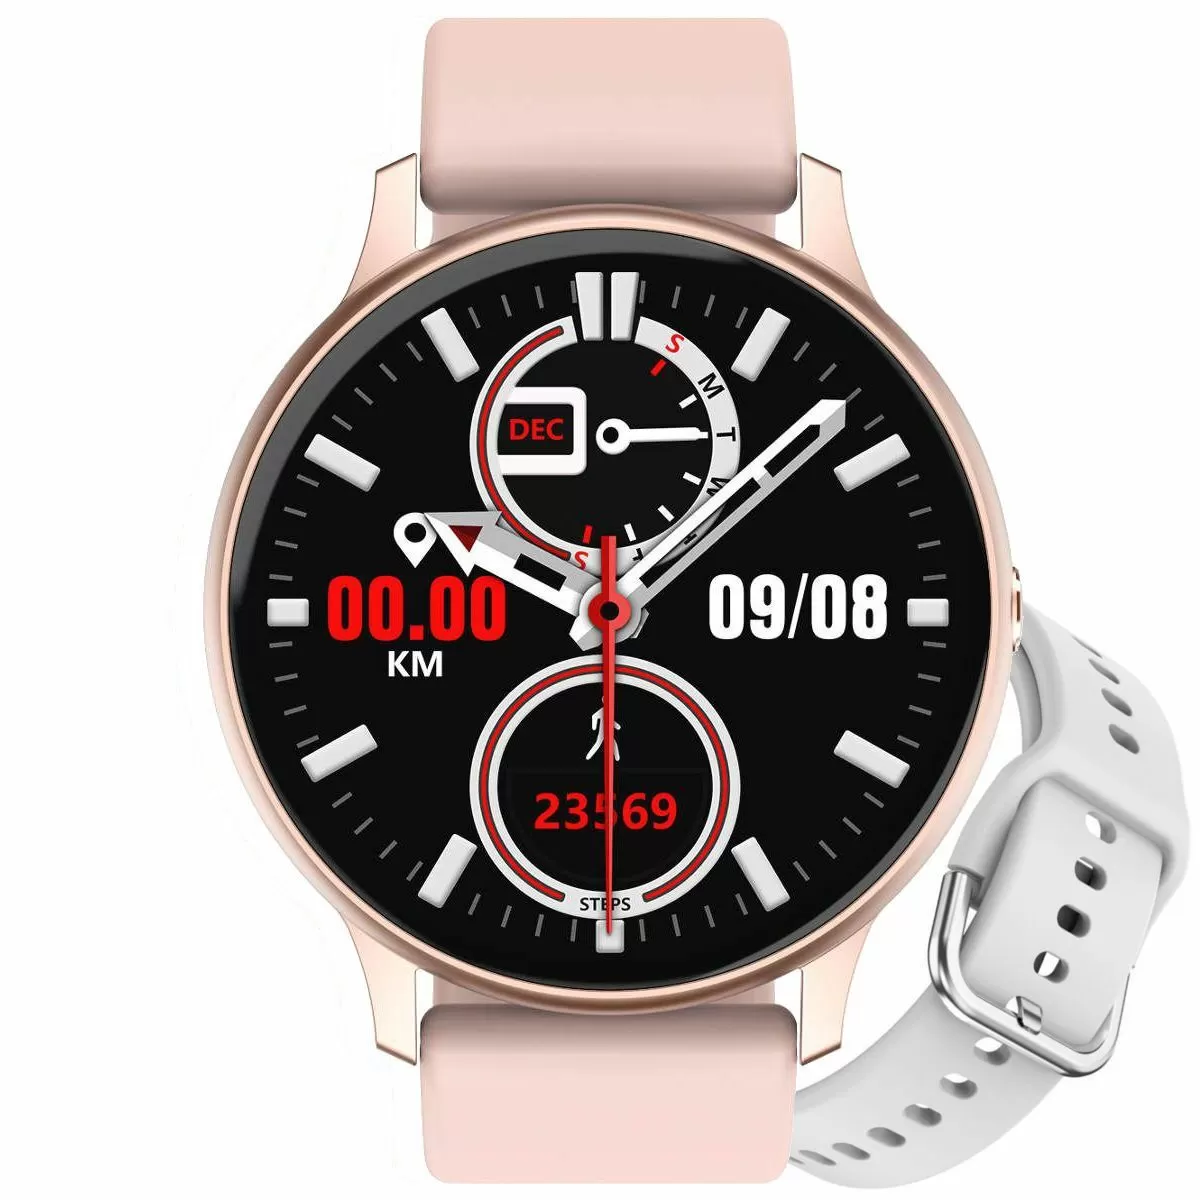 Zdjęcia - Smartwatche Pacific Smartwatch  09 Różowy + Biały Pasek | Kroki Kalorie Puls Sport Sen 